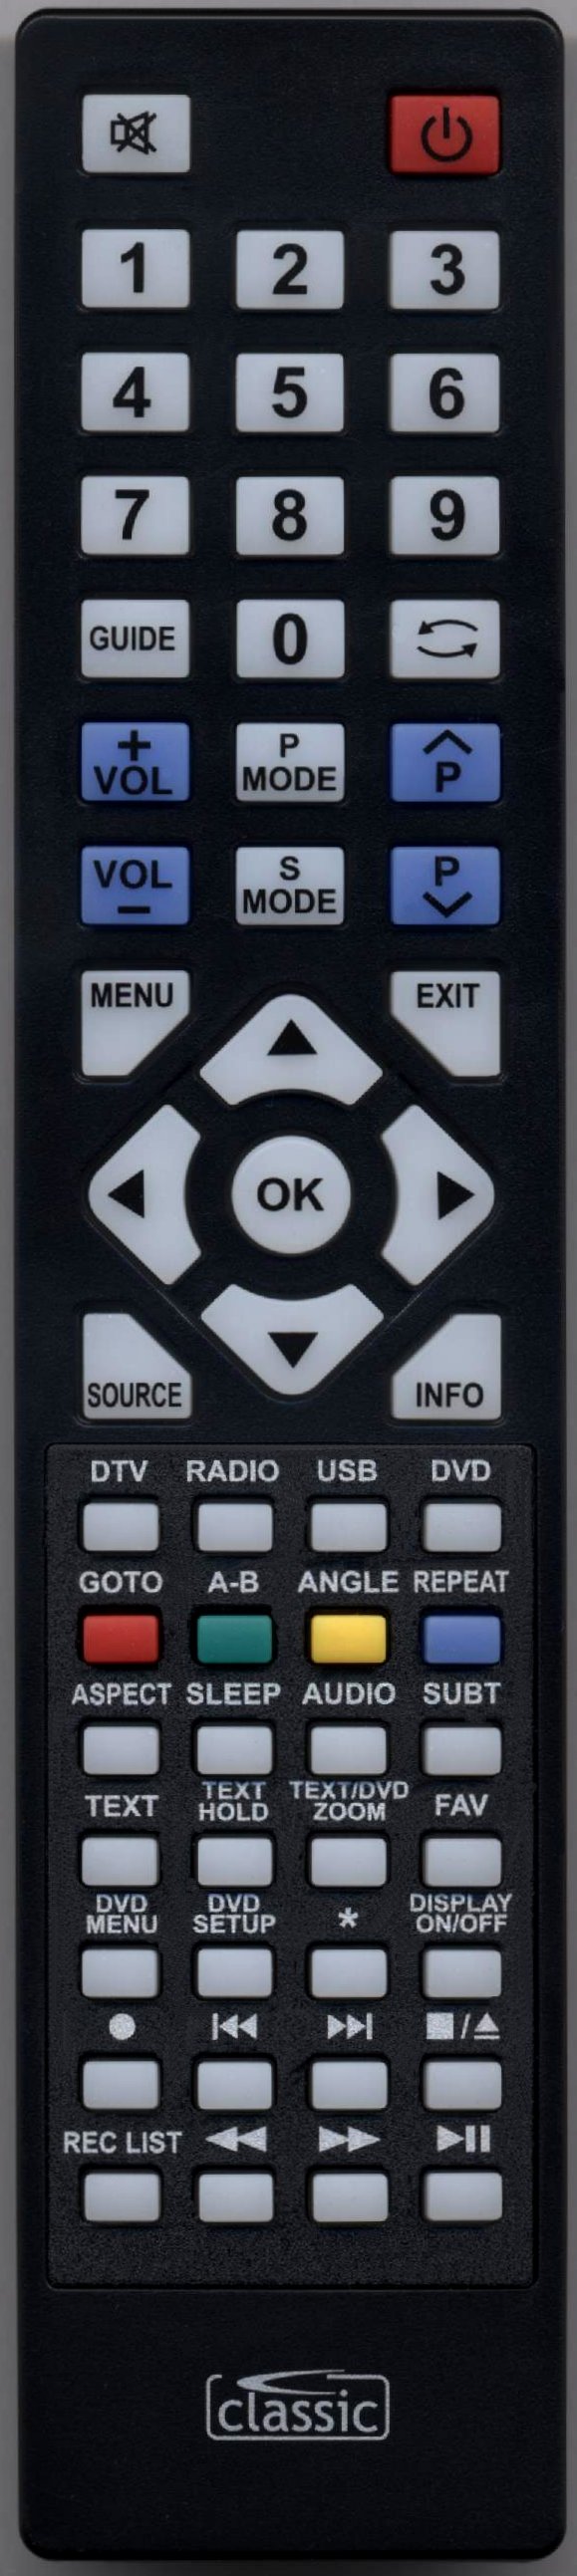 BLAUPUNKT 185/207I-GB-HKDUPS-UK Remote Control